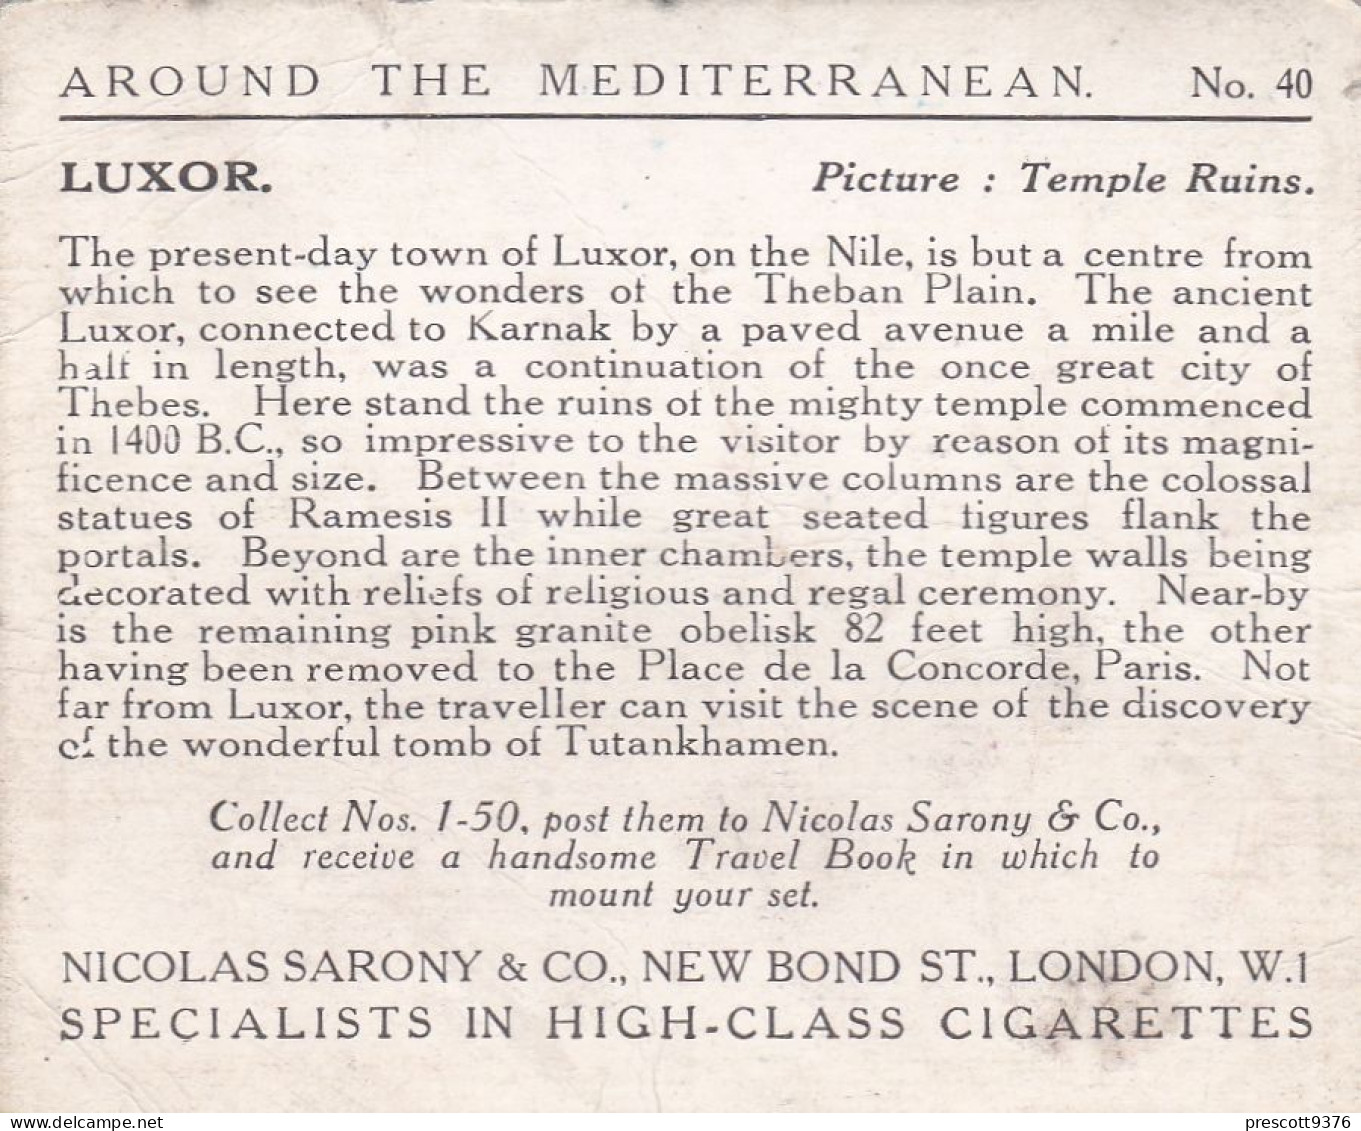 Around The Mediterranean 1926 - 40 Luxor, Temple Ruins  - Sarony Cigarette Card - Original Card - Large Size - Wills